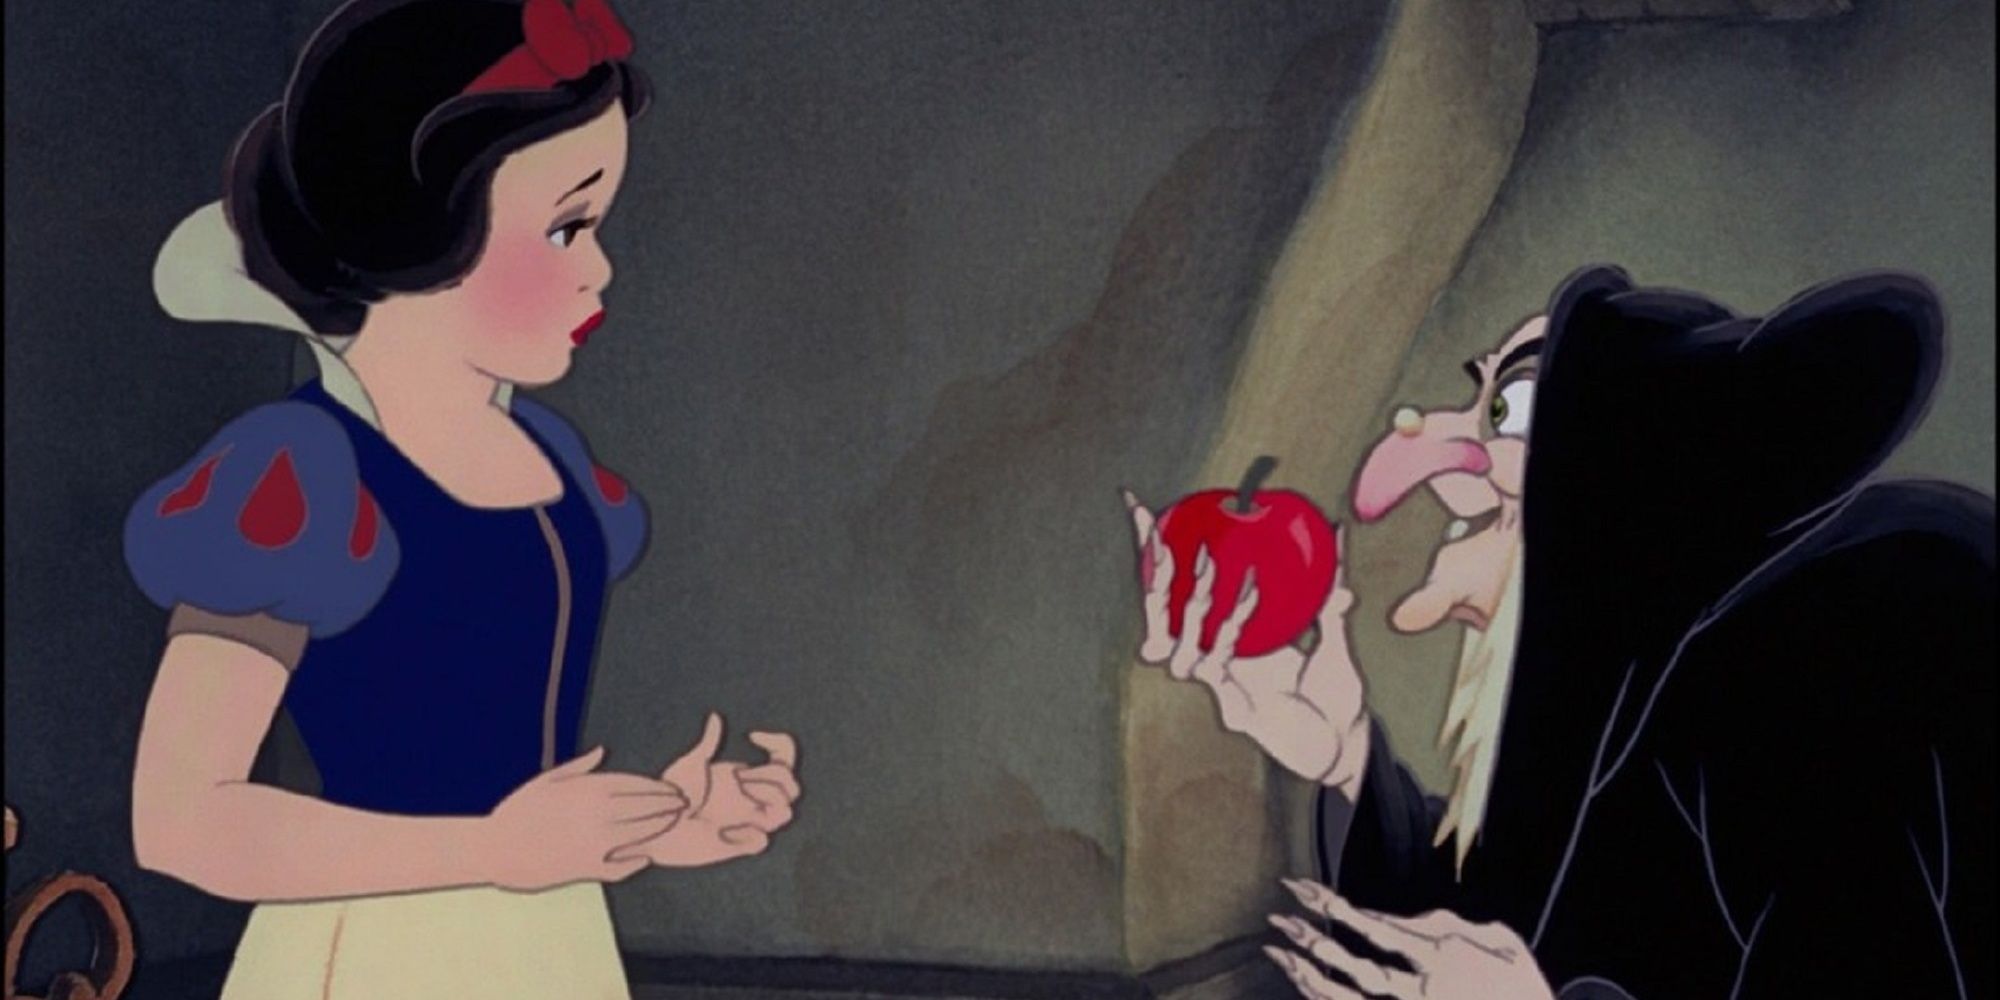 De boze heks die Sneeuwwitje de vergiftigde appel geeft in Disney's Sneeuwwitje